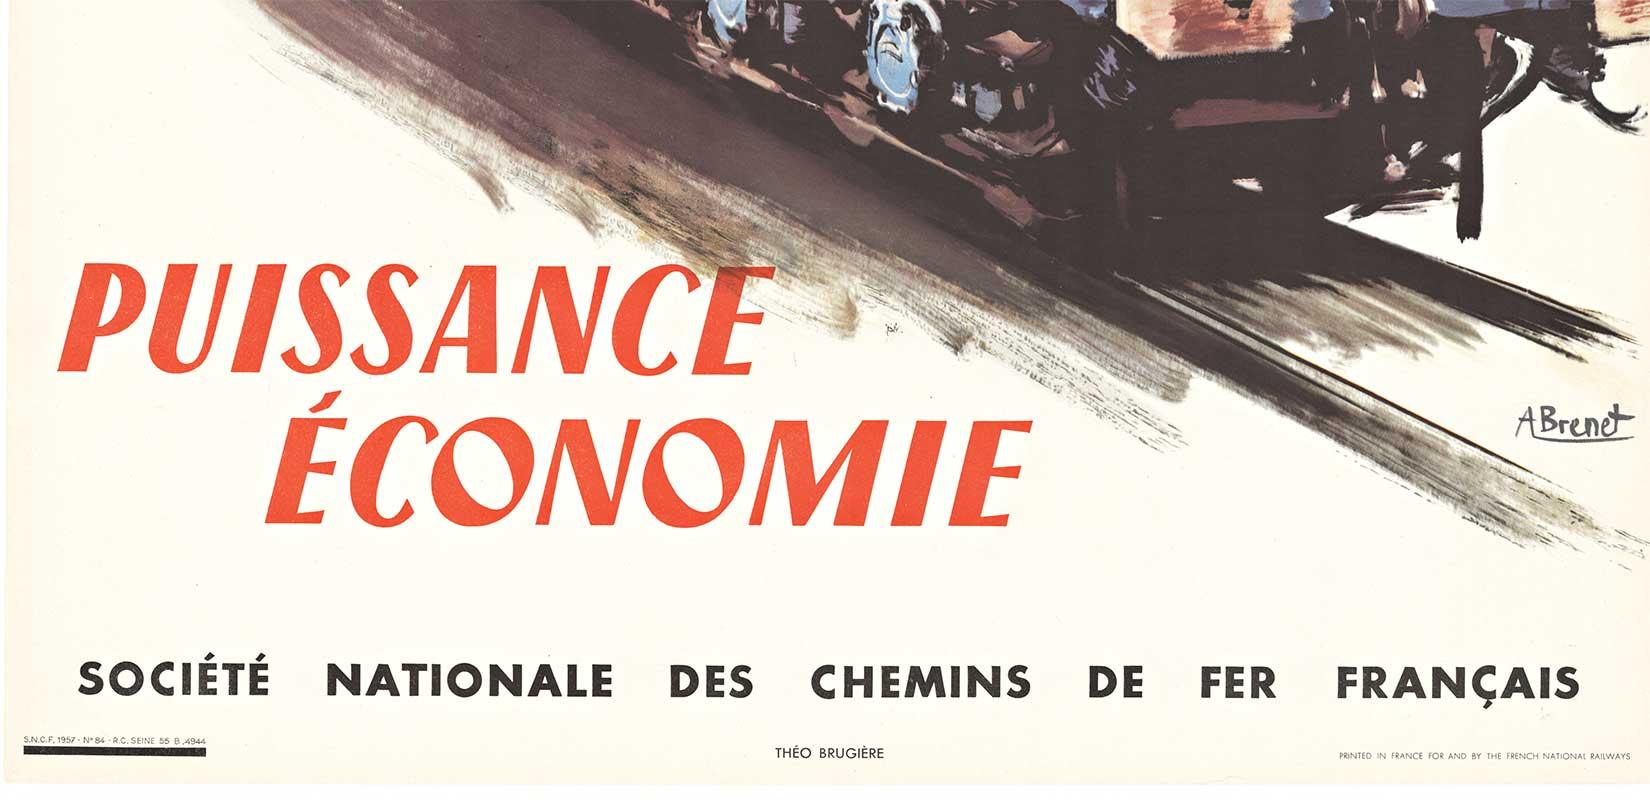 Puissance Economie SNCF French Railroad. original vintage poster - Print by Albert Brenet